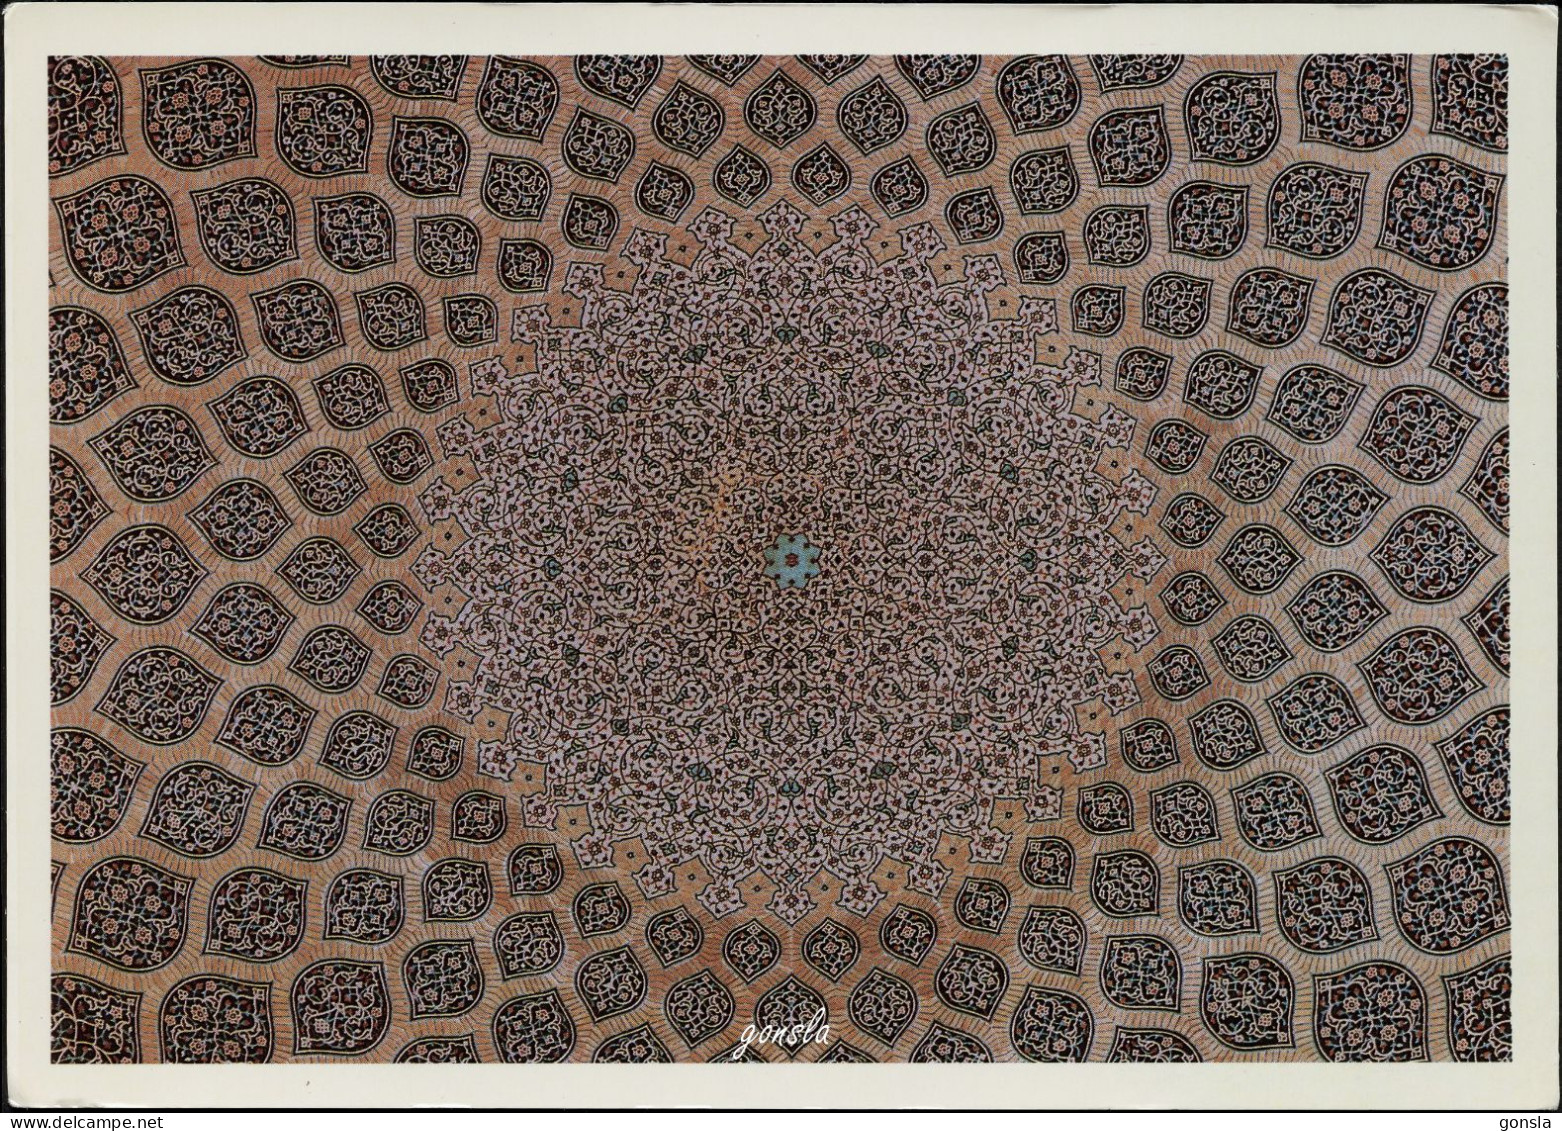 IRAN "ESFAHAN" + Yazd Amir Chaqmaq Mosque. Lot de 5 grandes cartes postales